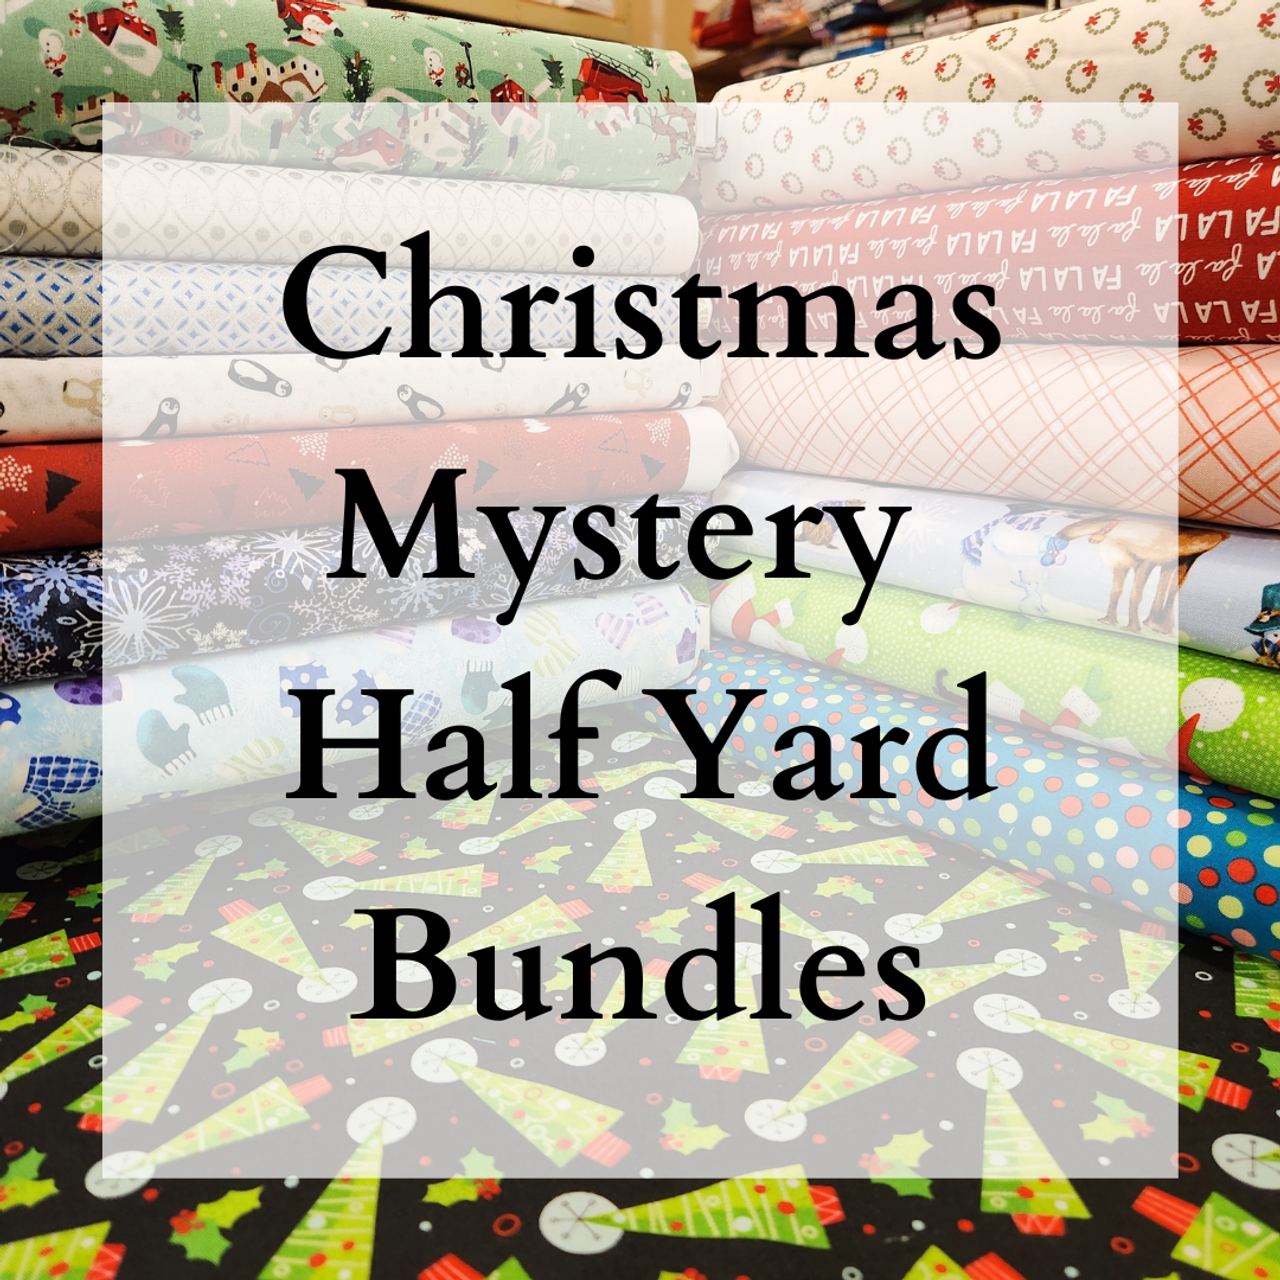 Christmas and Winter Mystery Half Yards of Fabric - 6 half yards